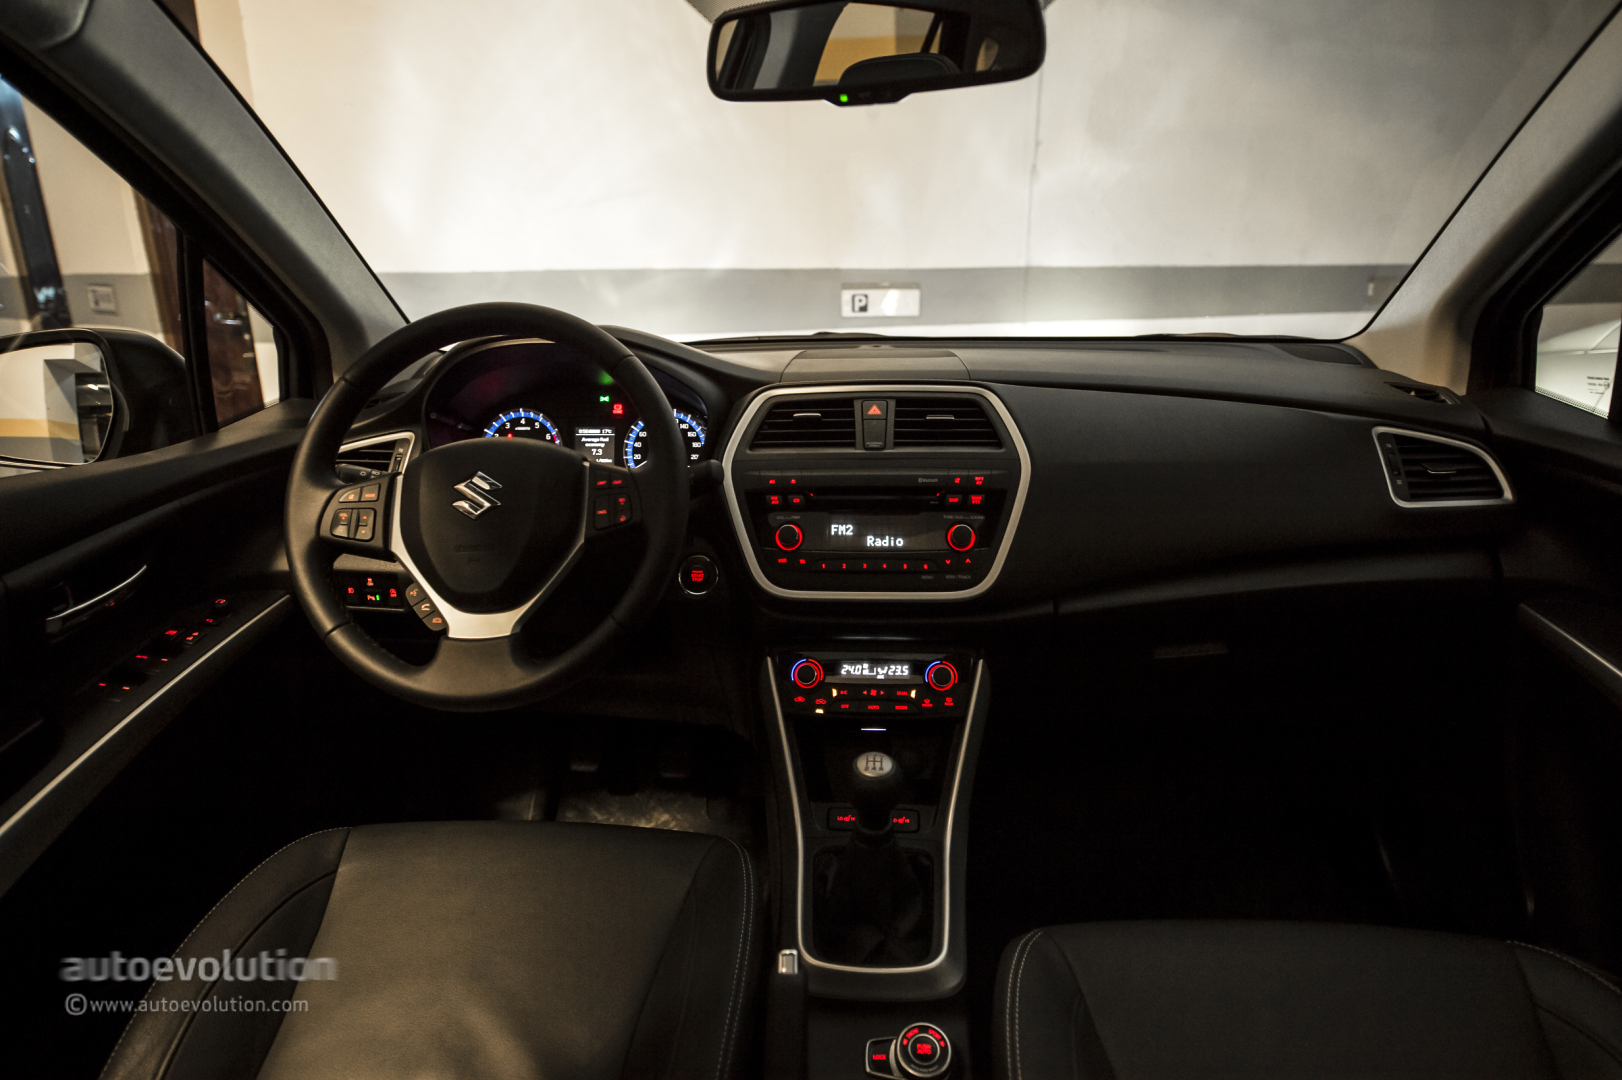 Suzuki S-Cross auto 2014 review